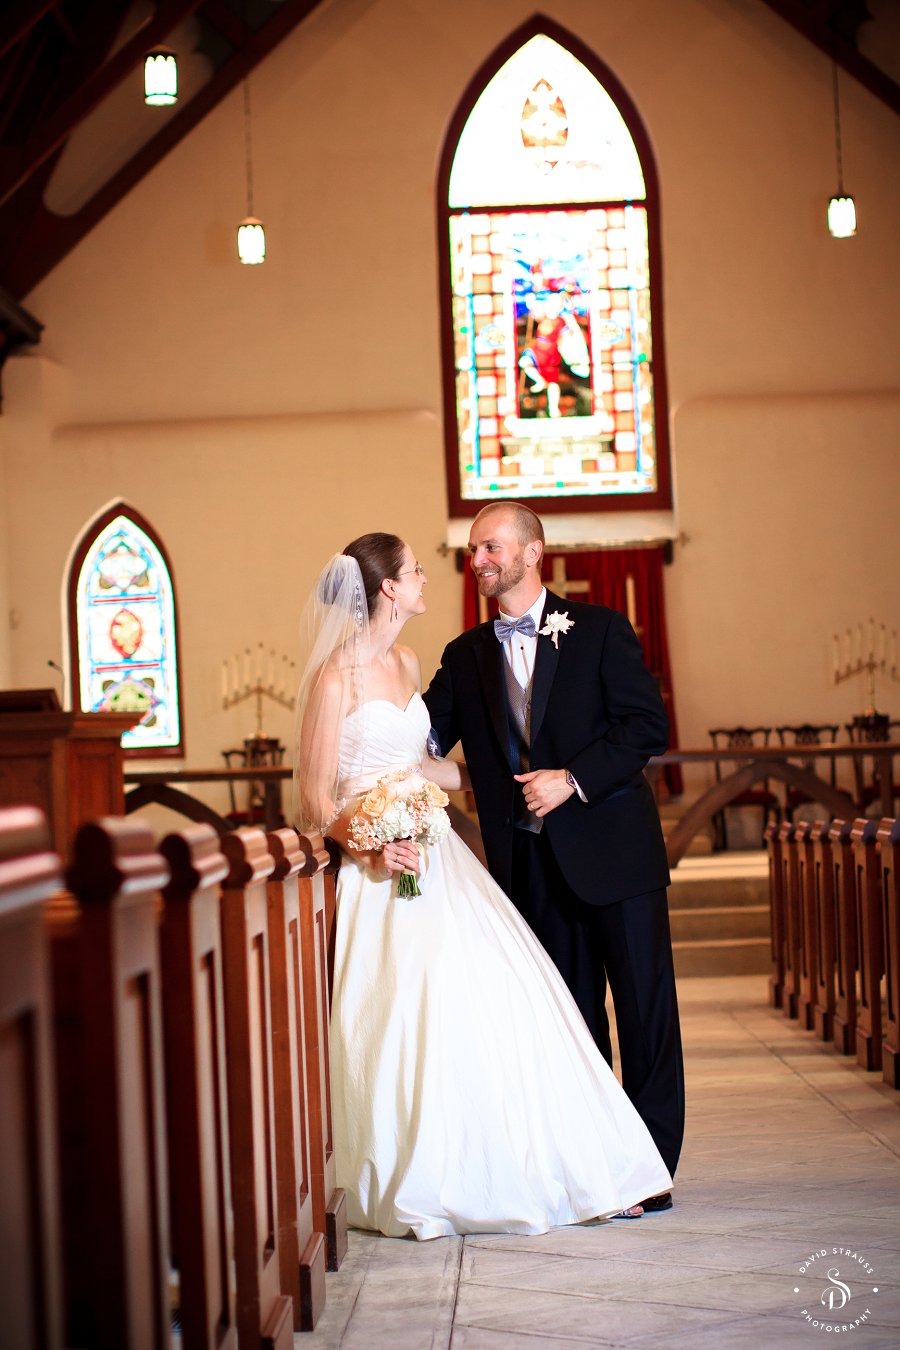 St. Lukes Chapel Wedding Ceremony - McCrady's Reception Venue - David Strauss Photography -5